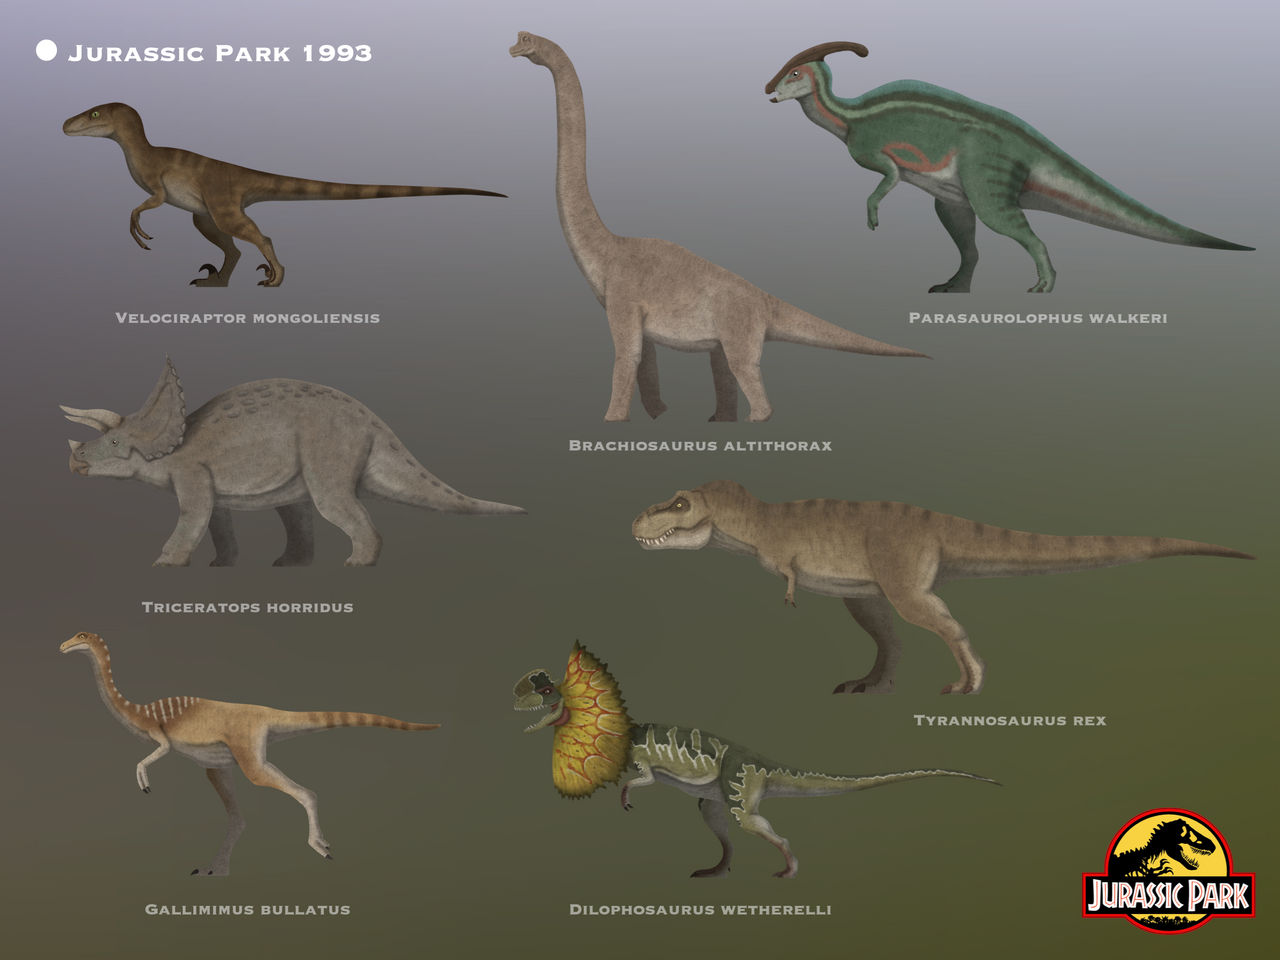 Jurassic park 1993 @Paleohistoric by PaleoHistoric on DeviantArt